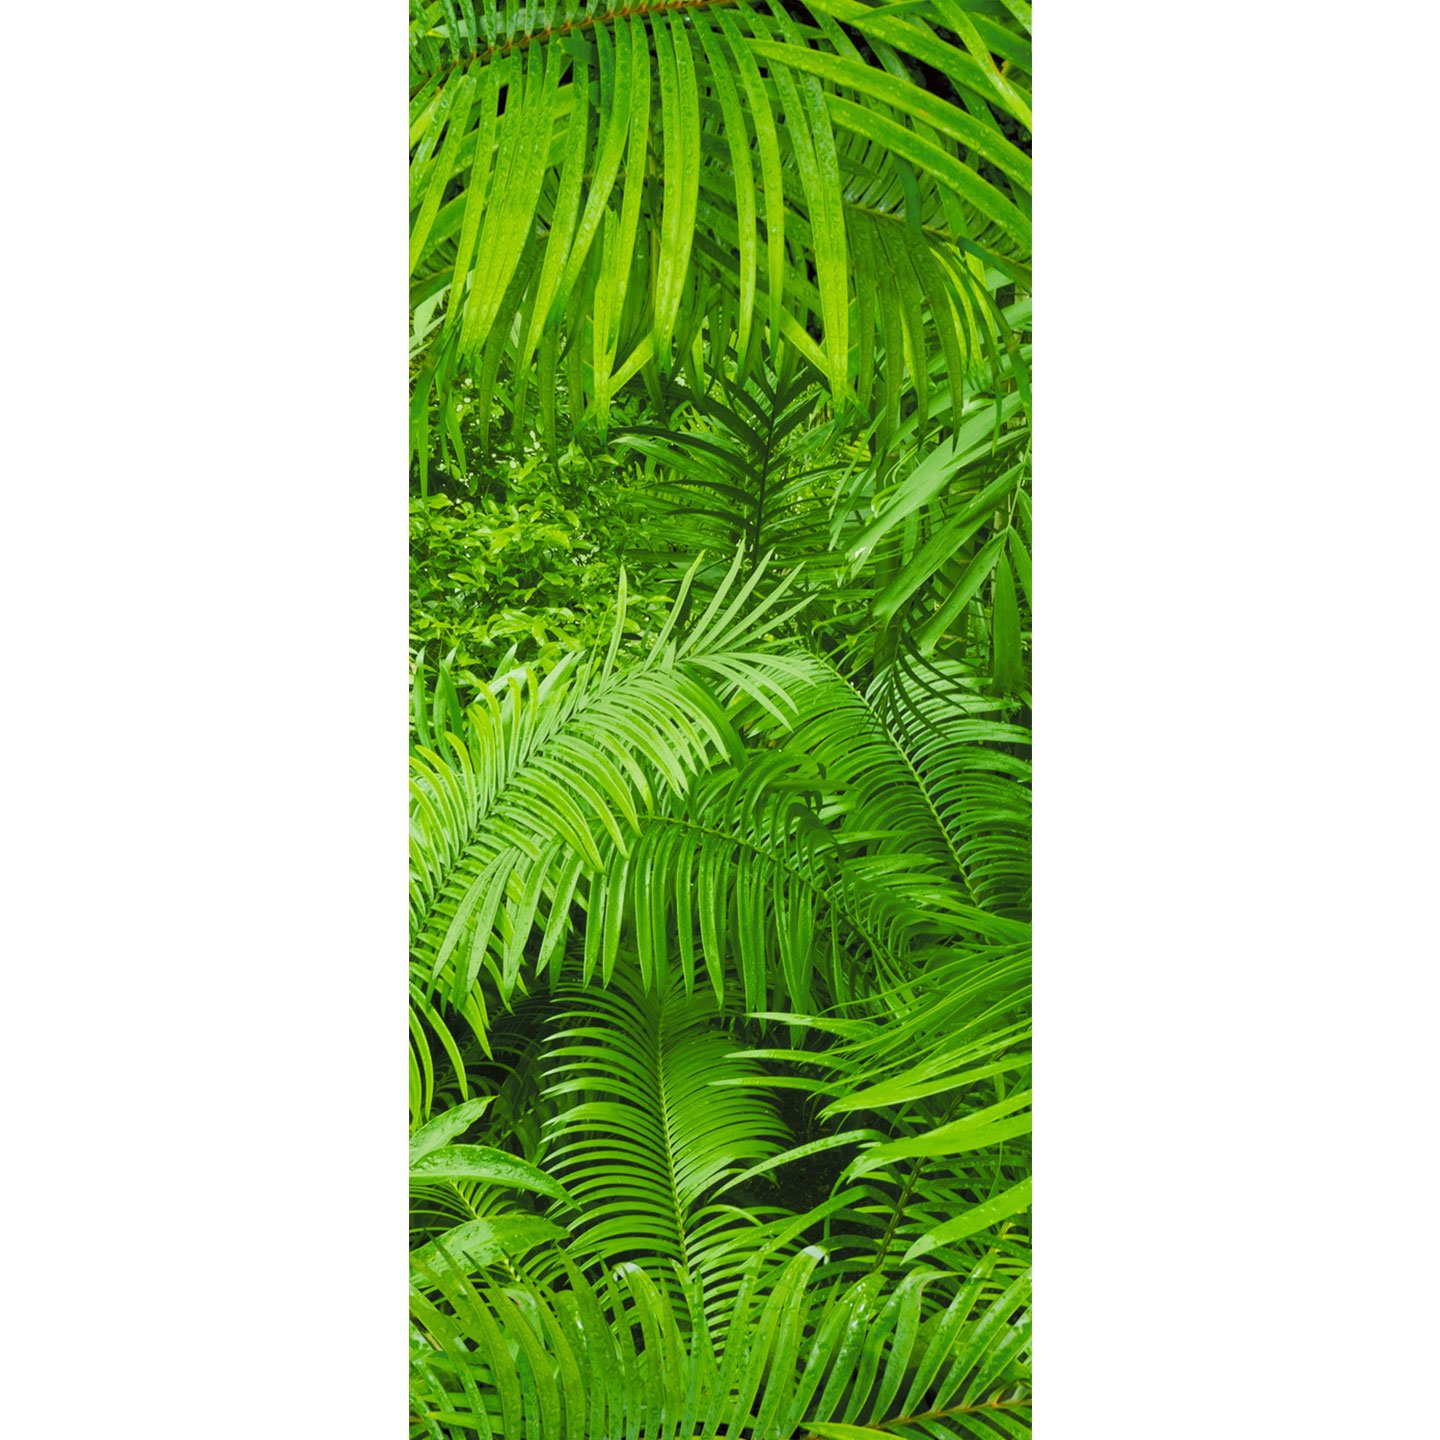 Haworth BuzziSkin Accessories Wallpaper with jungle fern design